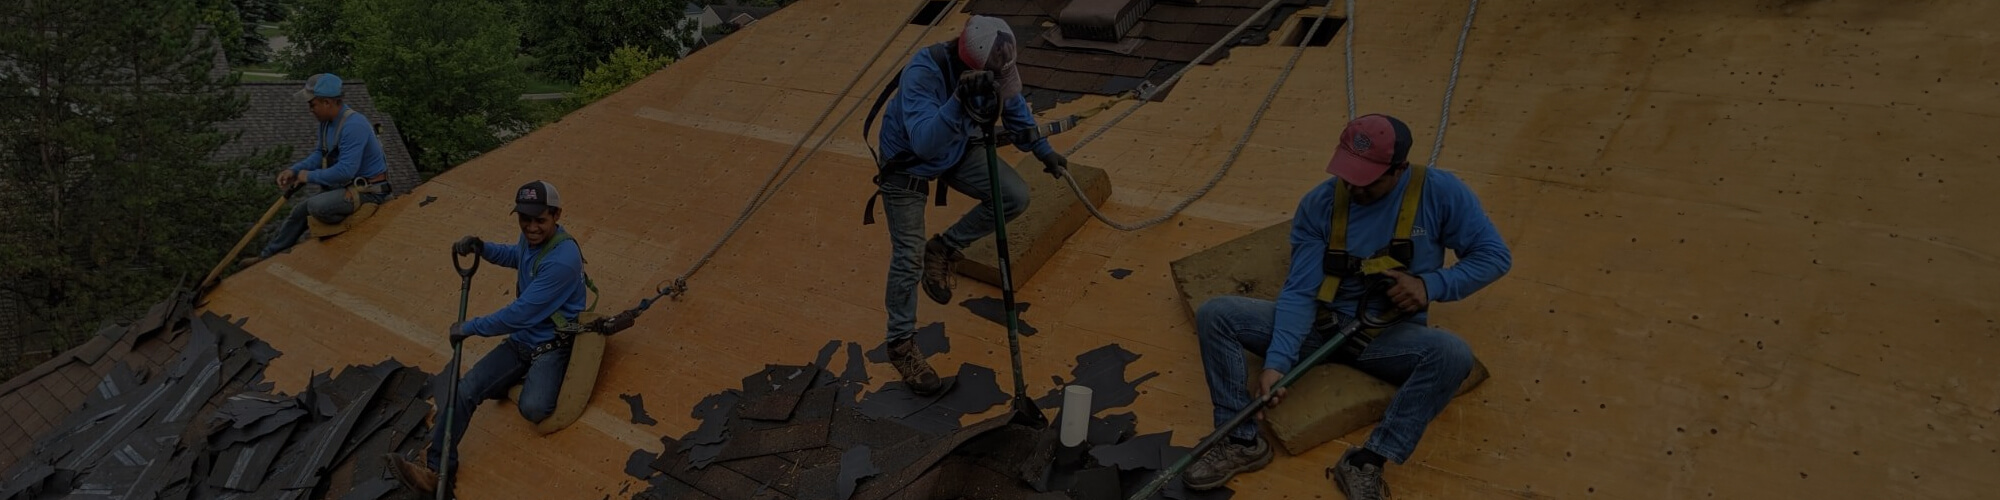 Roofing company in Grand Rapids, Michigan